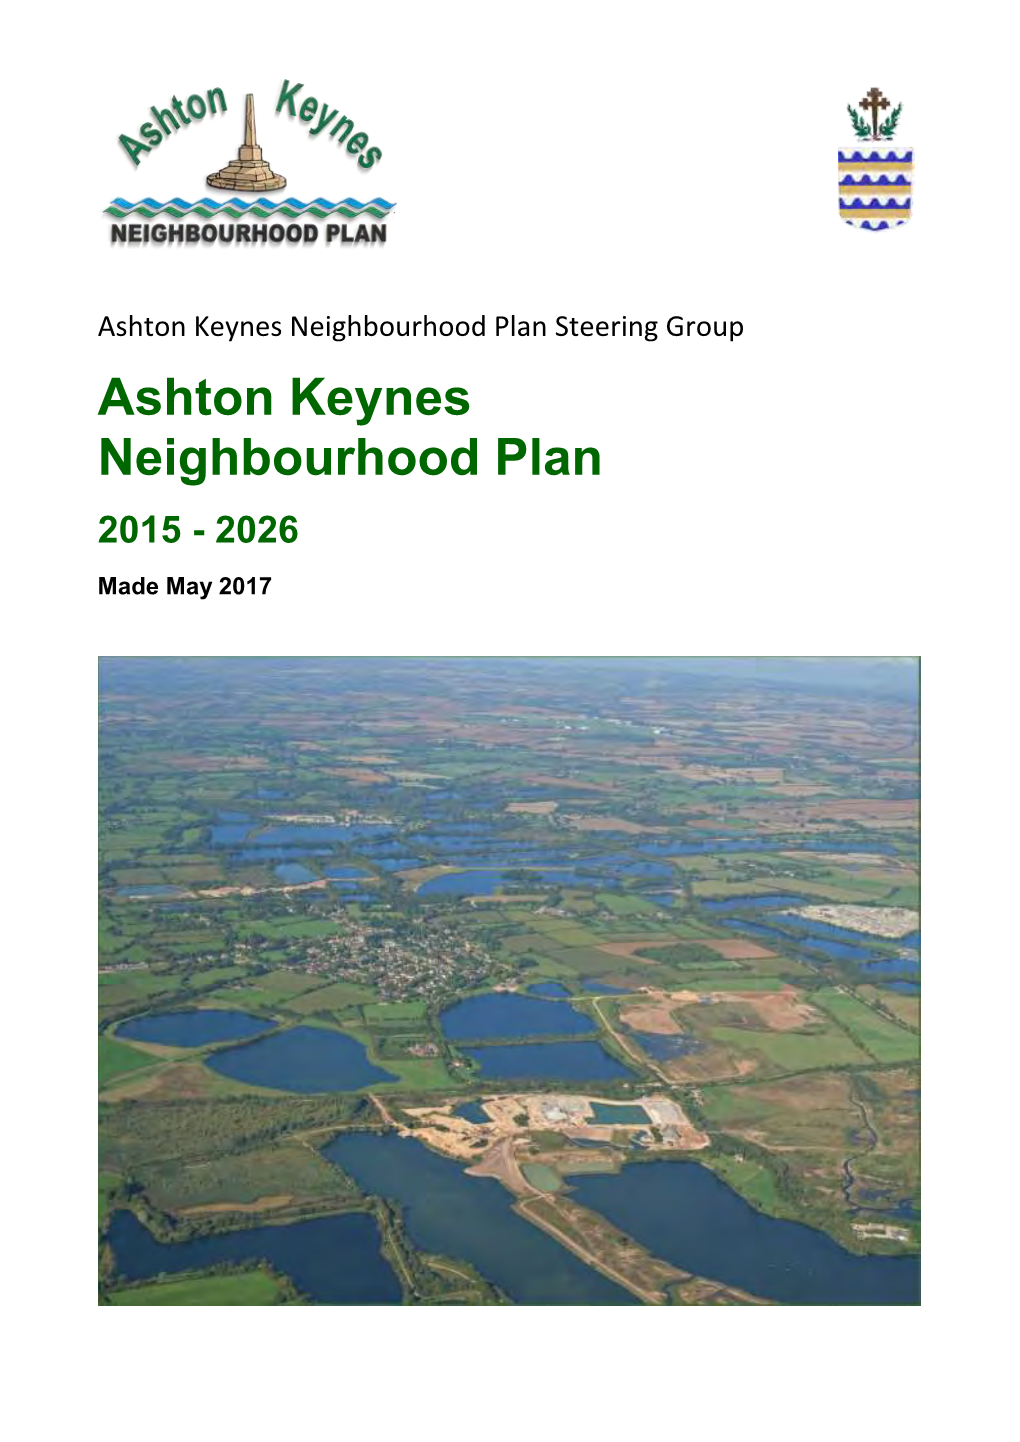 Ashton Keynes Neighbourhood Plan Steering Group Ashton Keynes Neighbourhood Plan 2015 - 2026